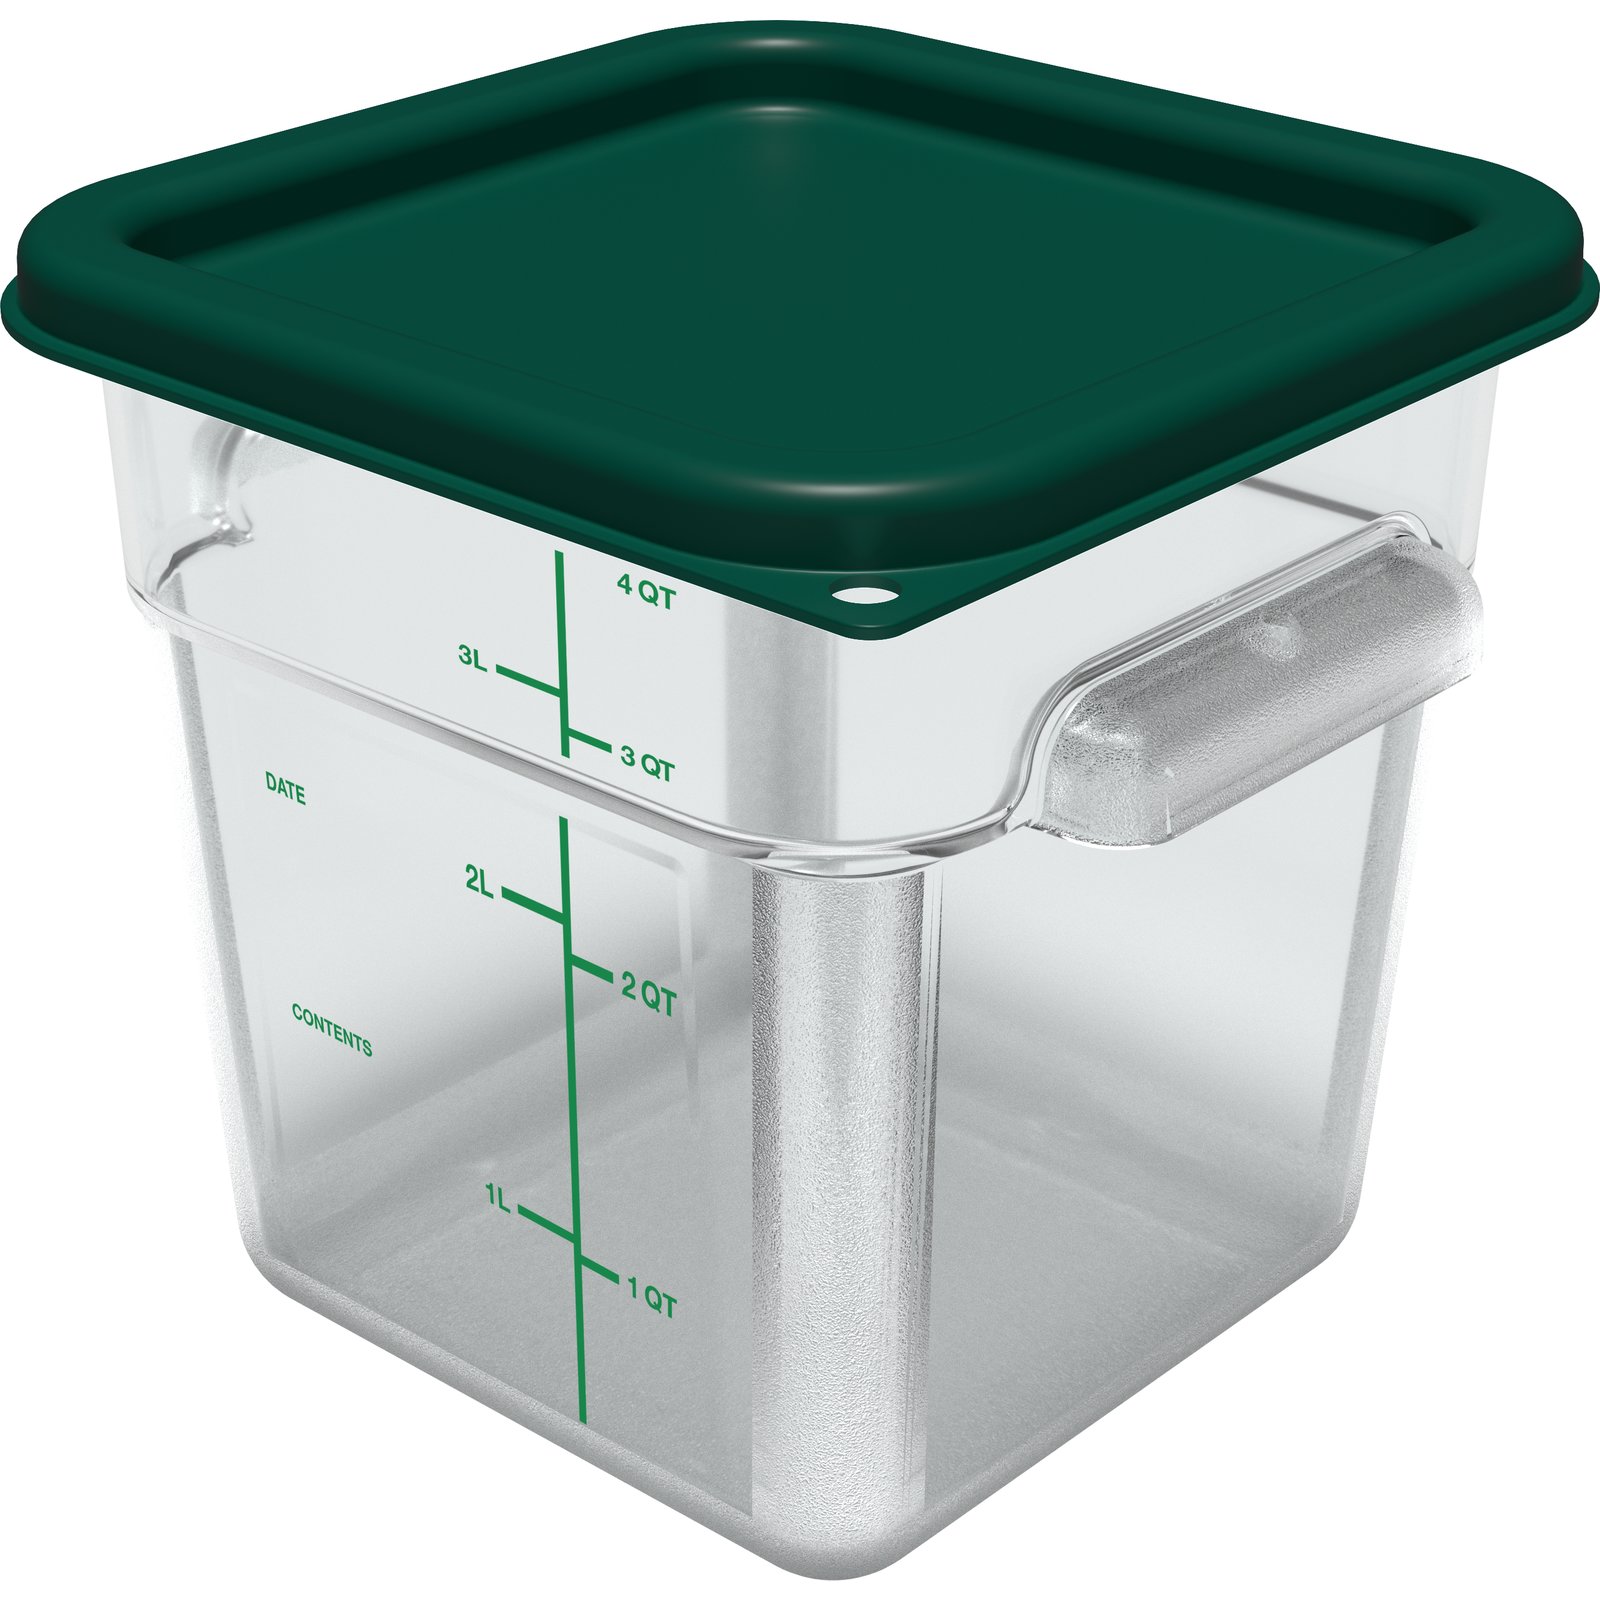 Carlisle 1197008 Squares Food Storage Container Lid Fits 2 4 qt Squares Food Storage Containers